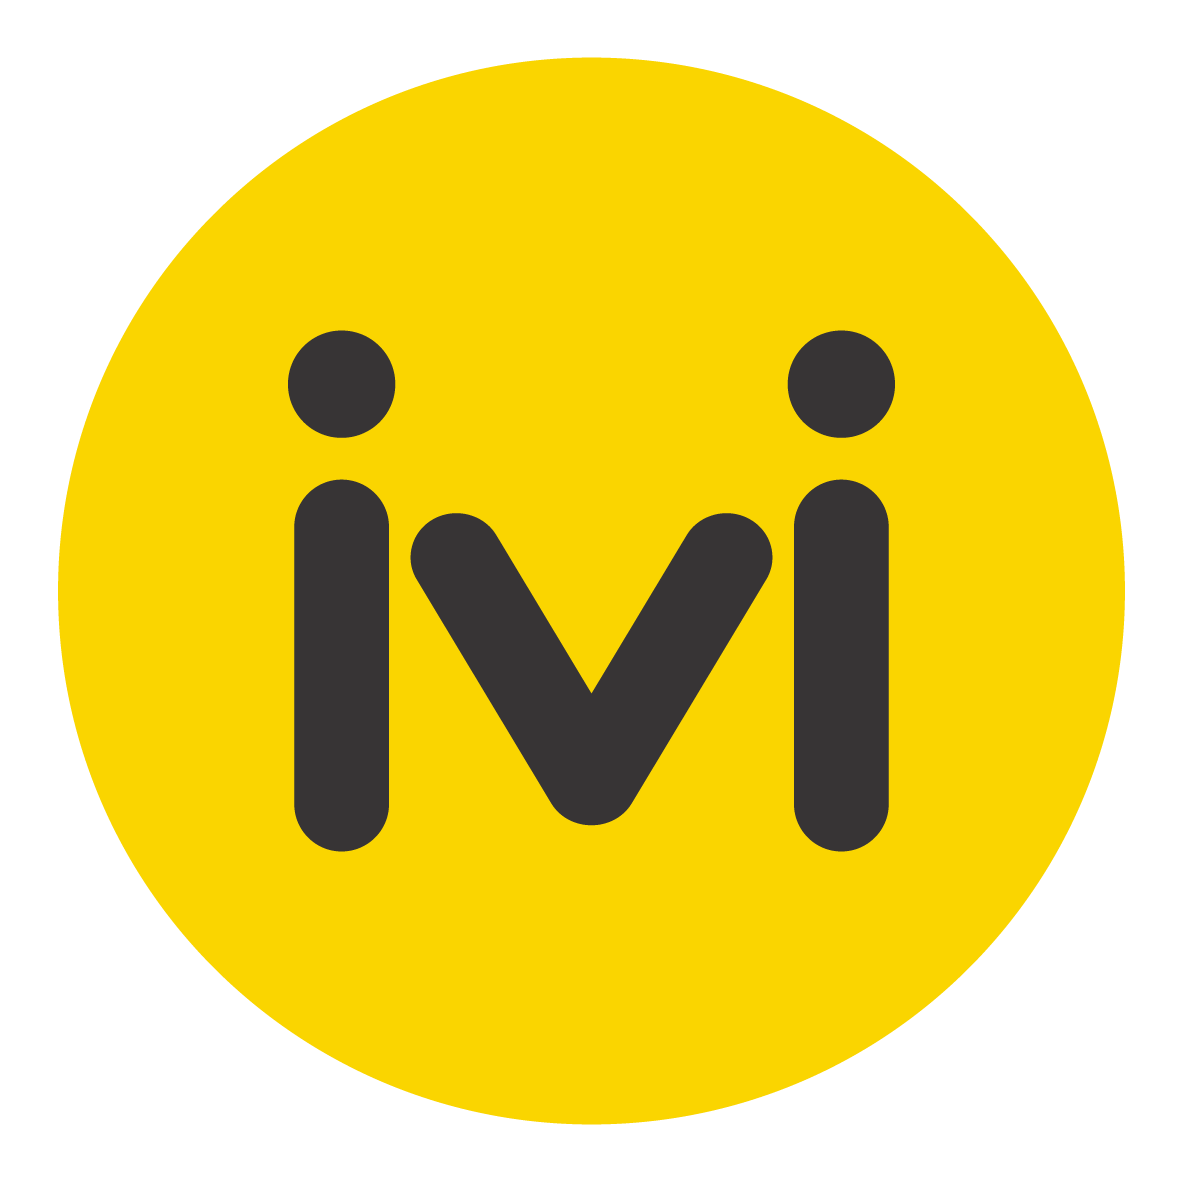 ivi.vn - Internet Vibe Inc